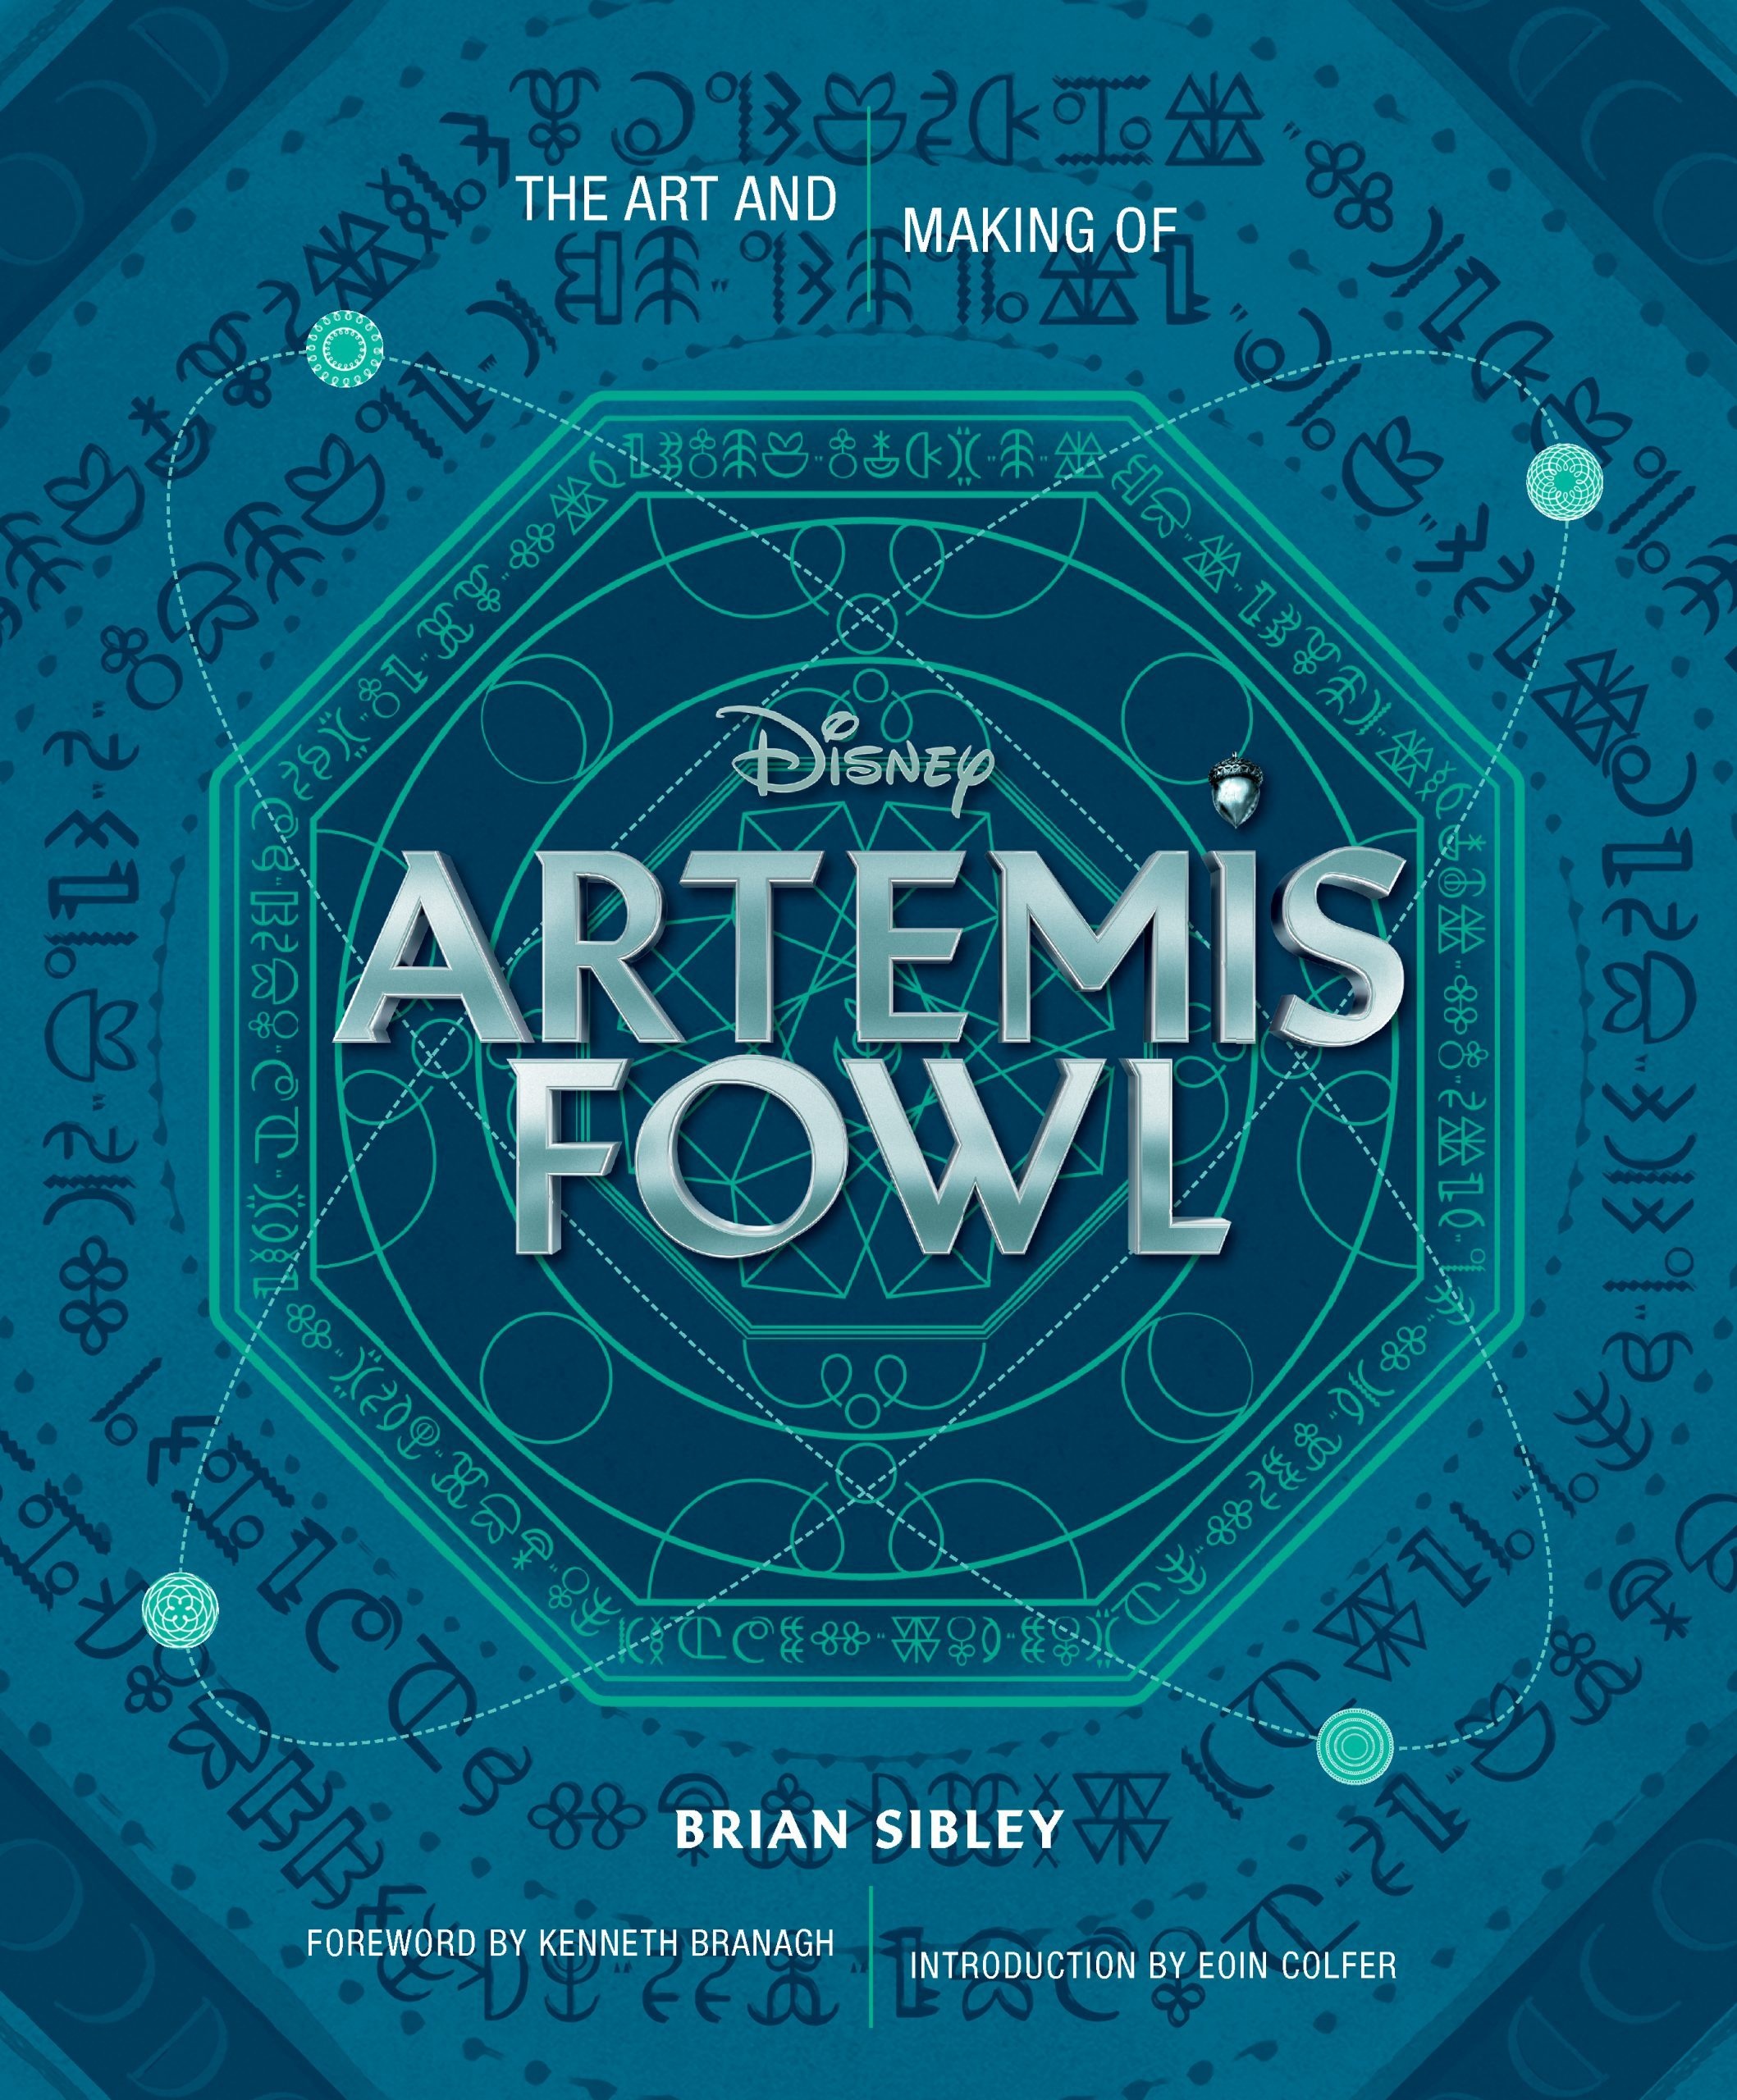 Artemis Fowl Movie Tie-In Edition by Eoin Colfer - Artemis Fowl, Disney  Books